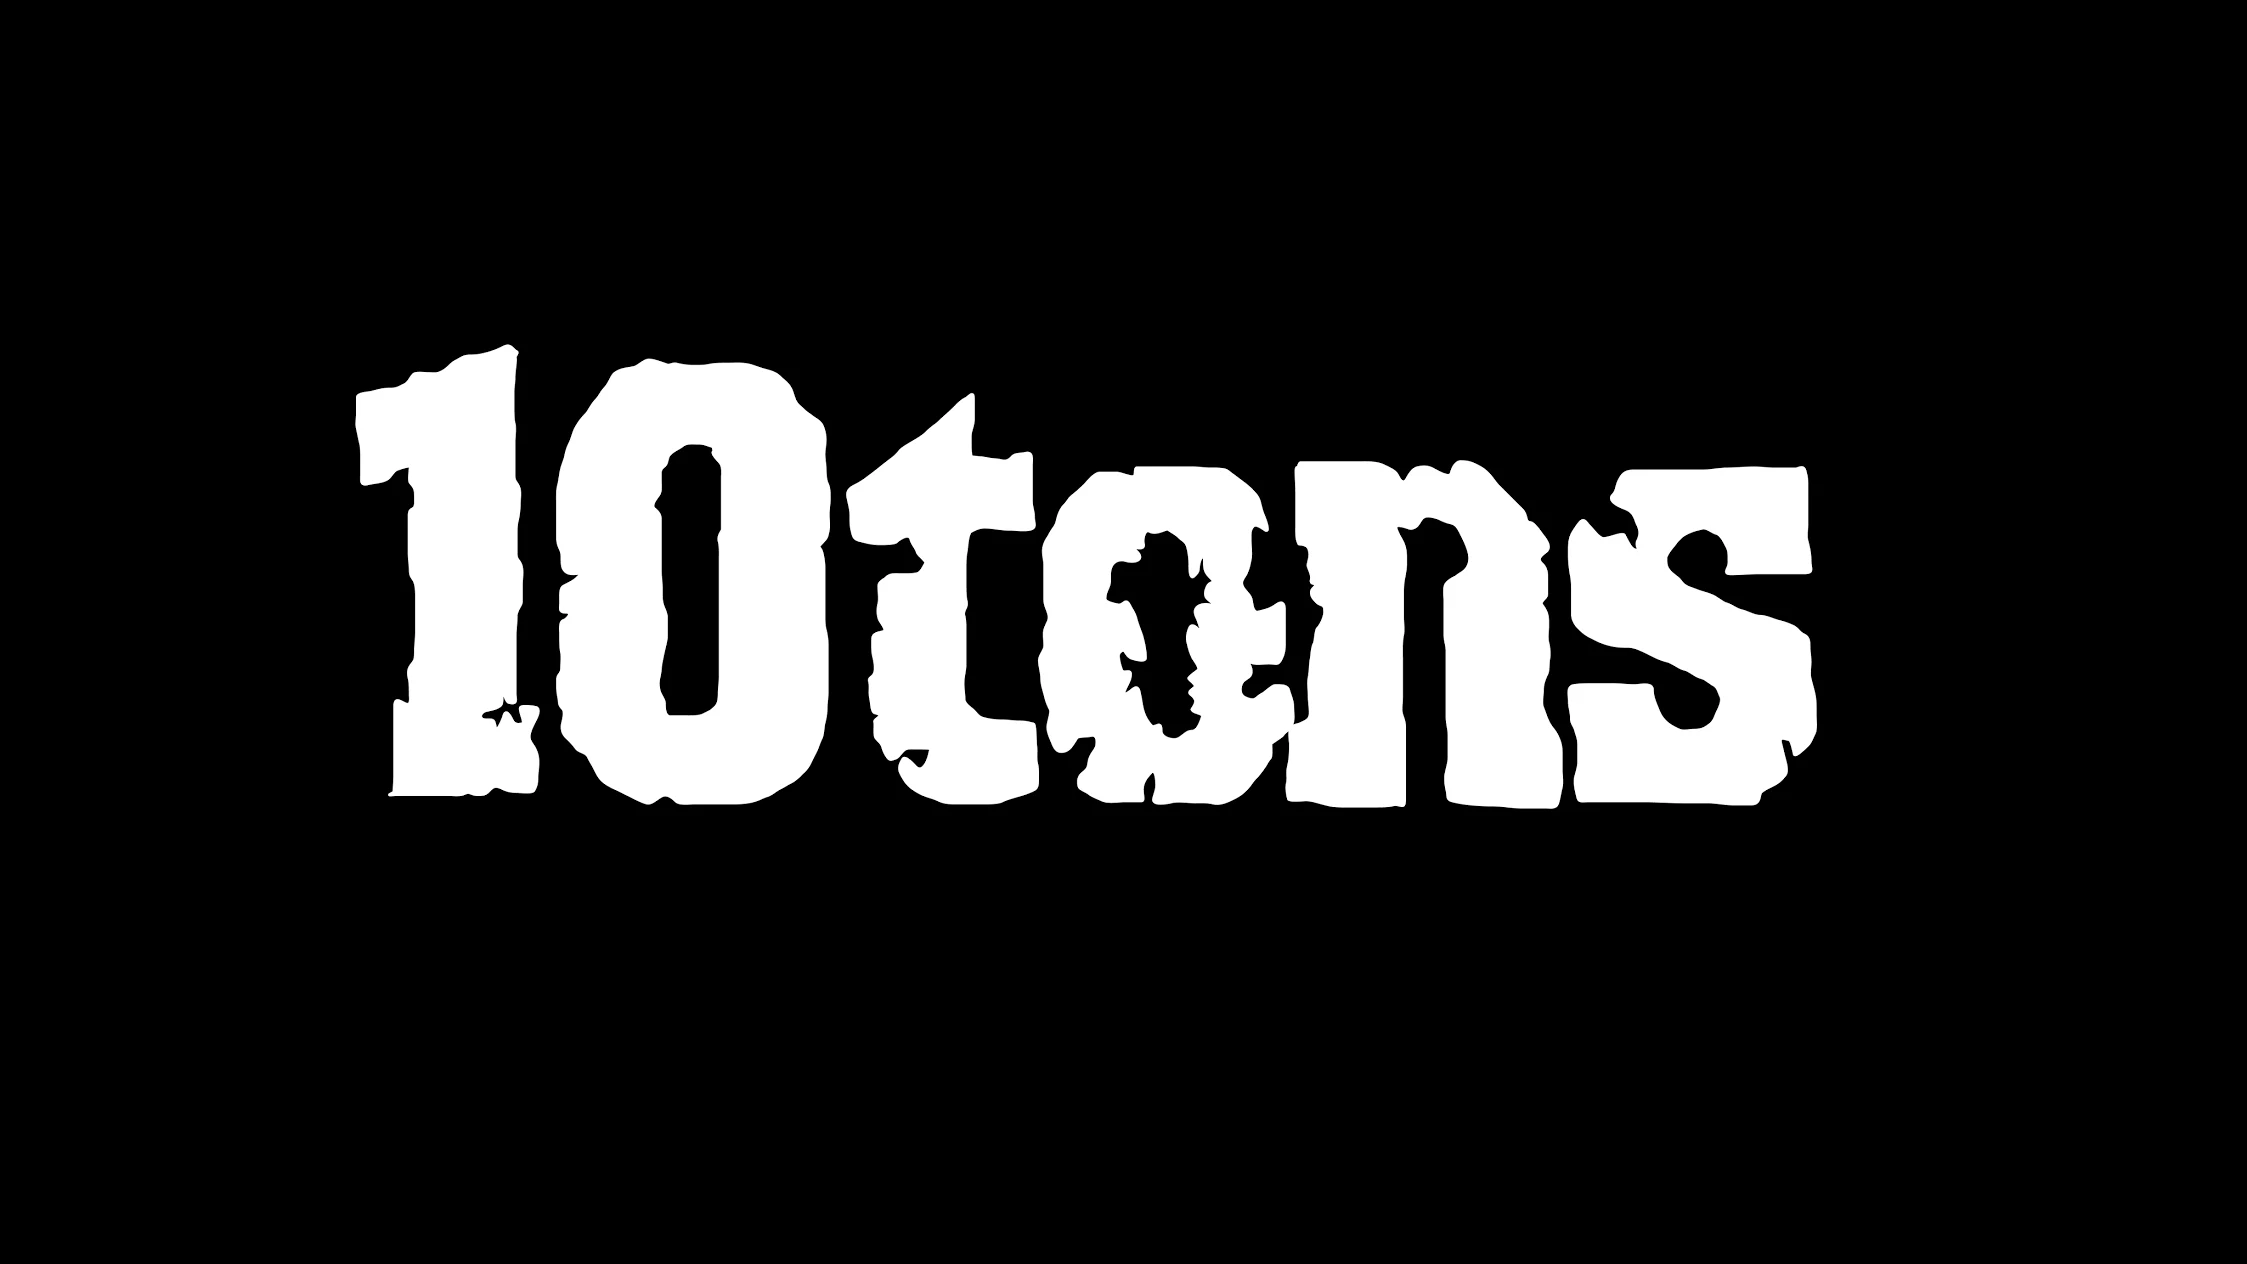 10tons Ltd